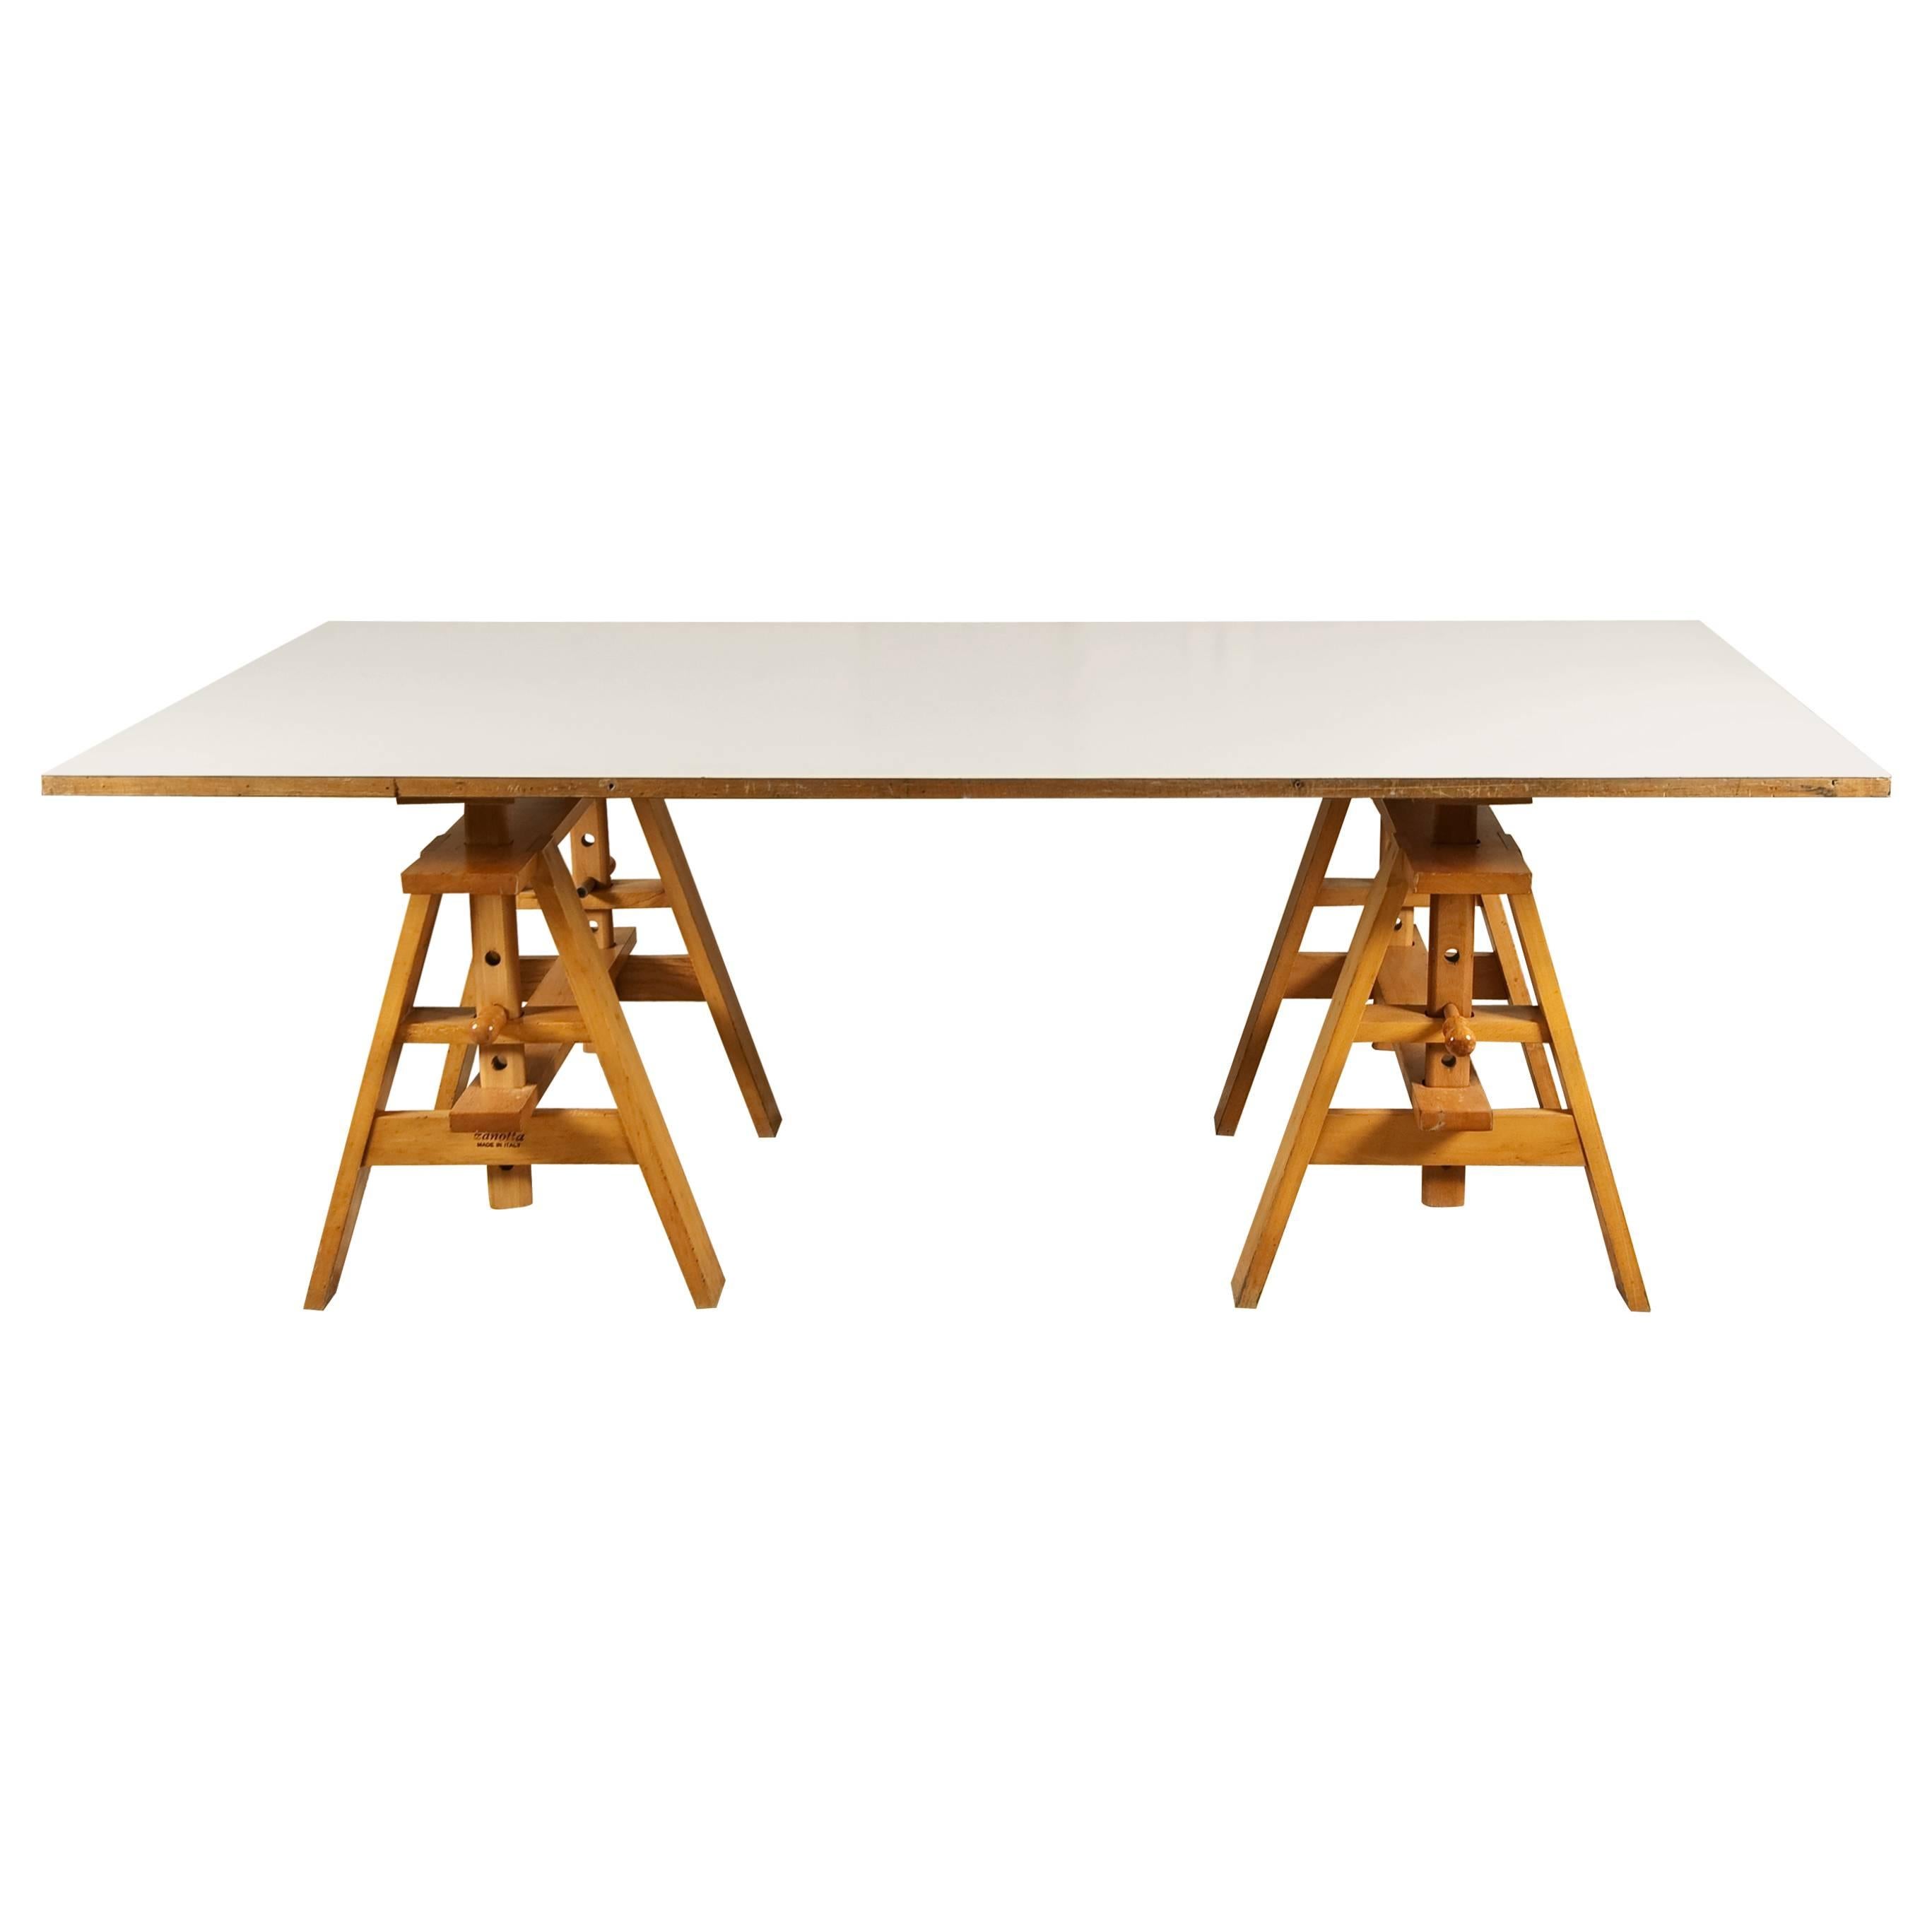 Zanotta Leonardo Table - 2 For Sale on 1stDibs